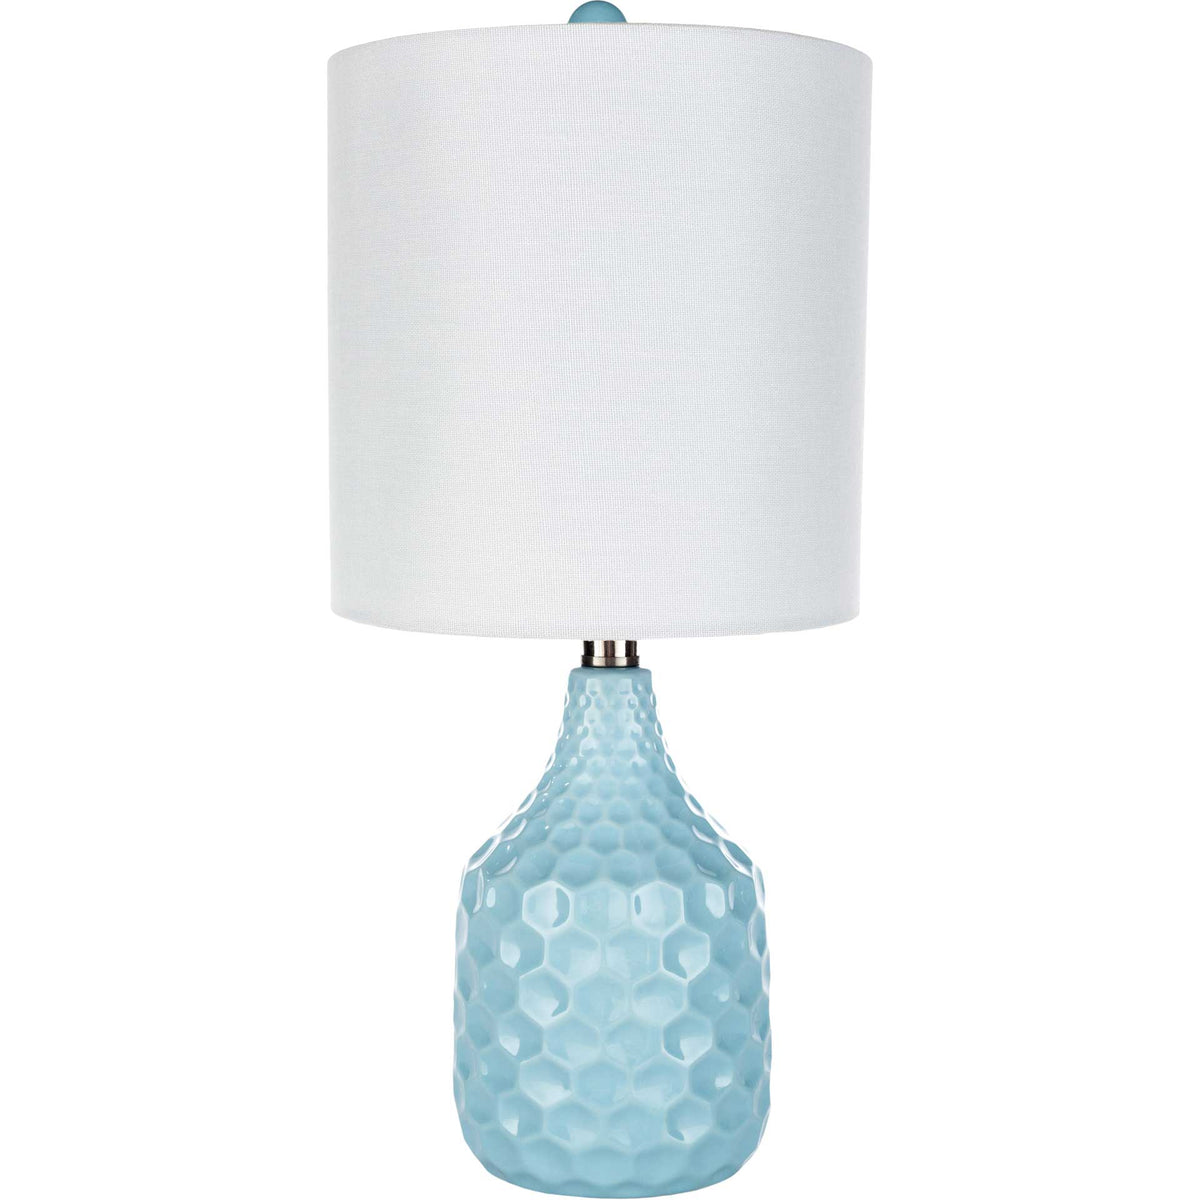 Blaze Table Lamp Aqua/White/Pale Aqua